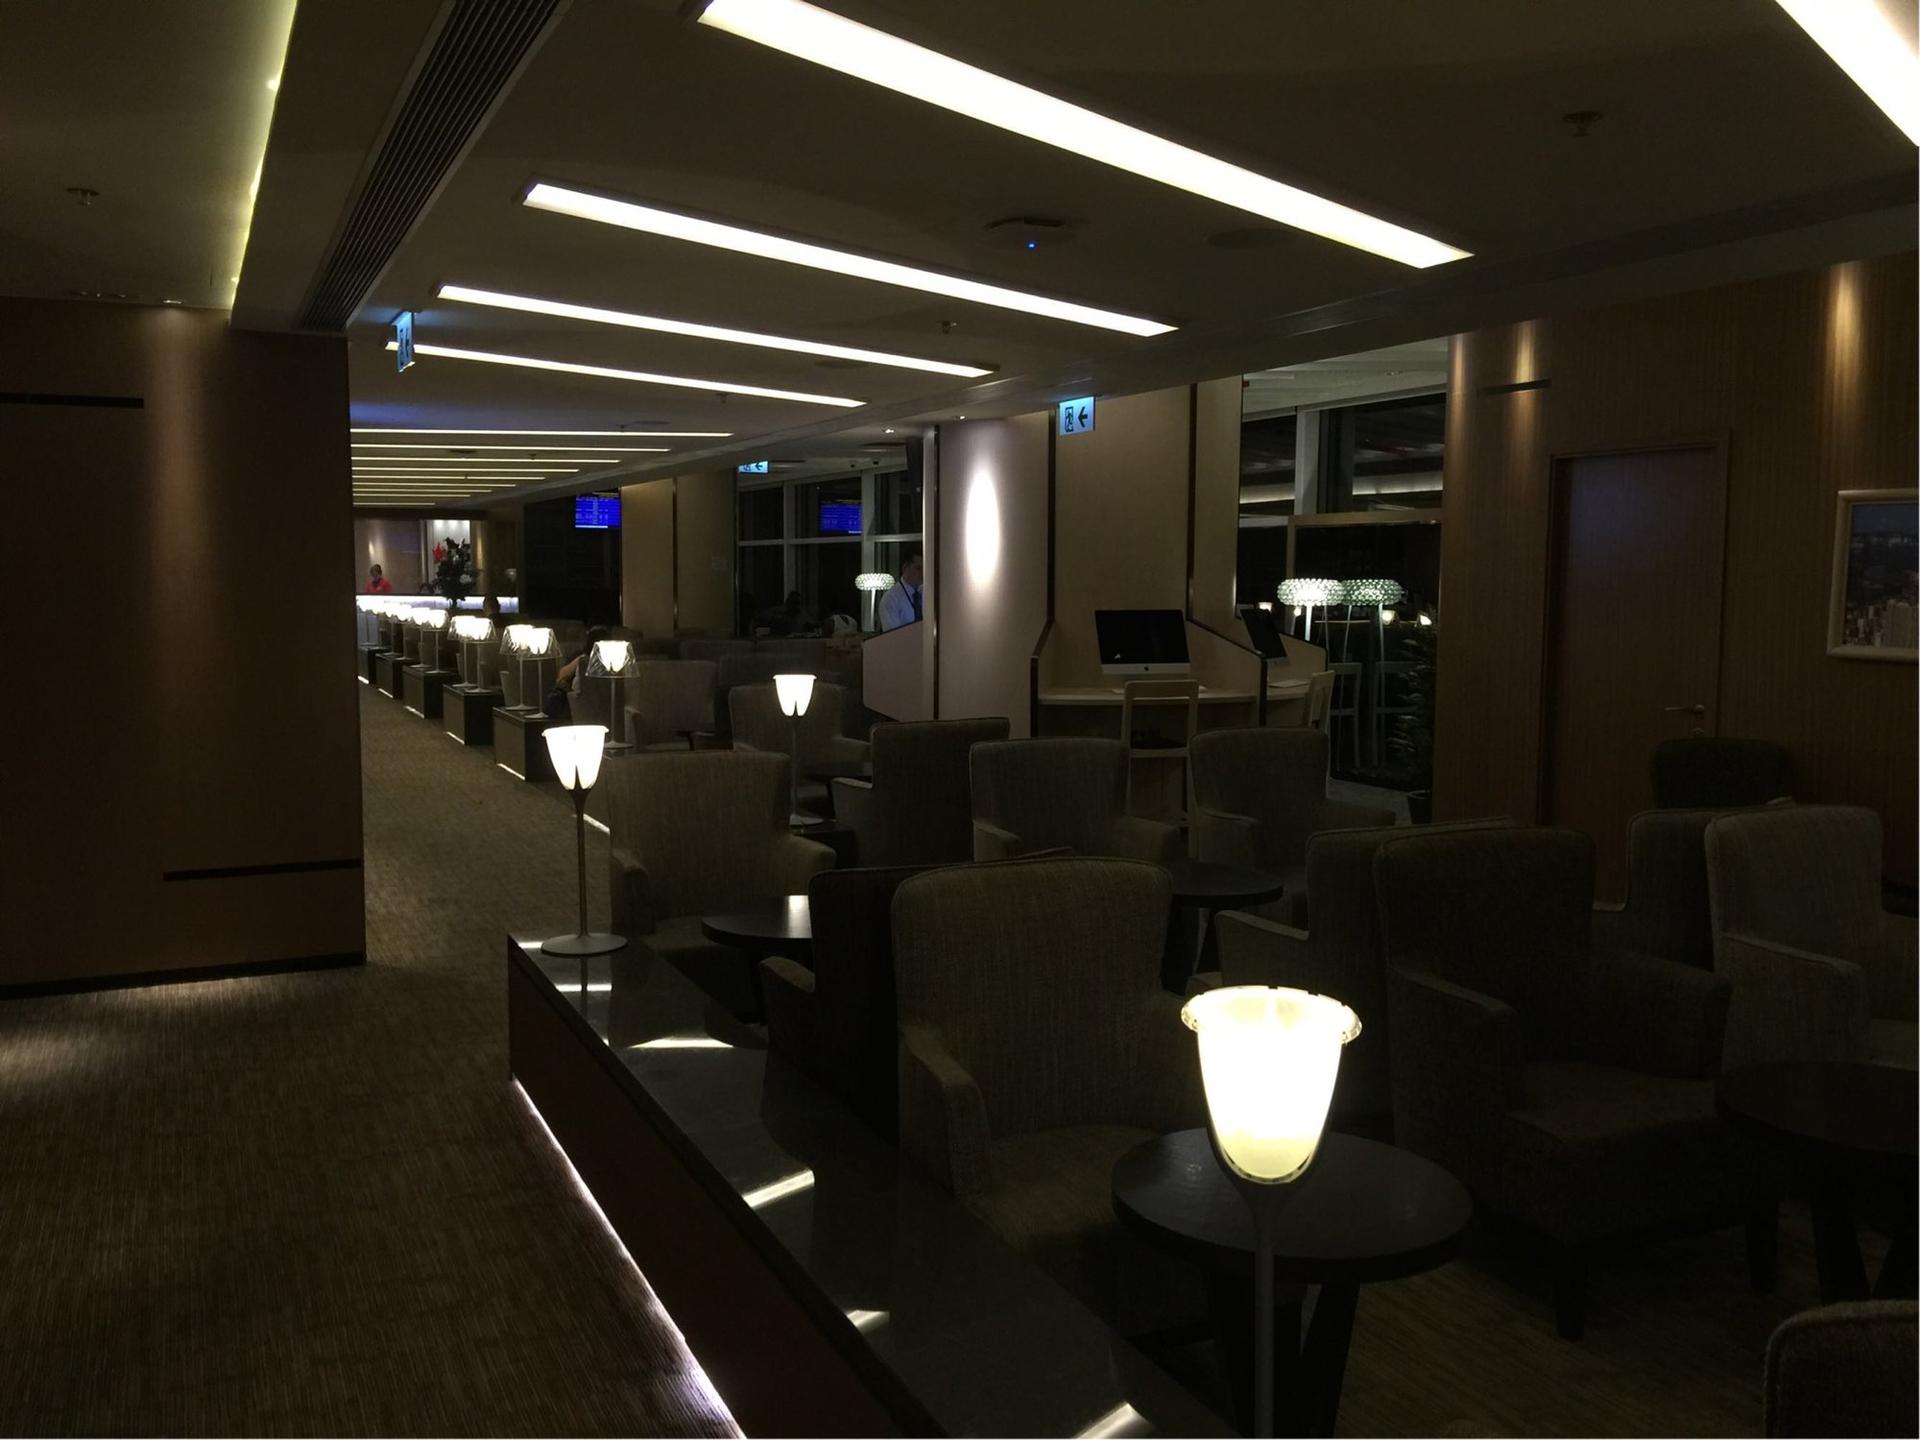 Hong Kong Airlines VIP Lounge (Club Bauhinia) image 6 of 40